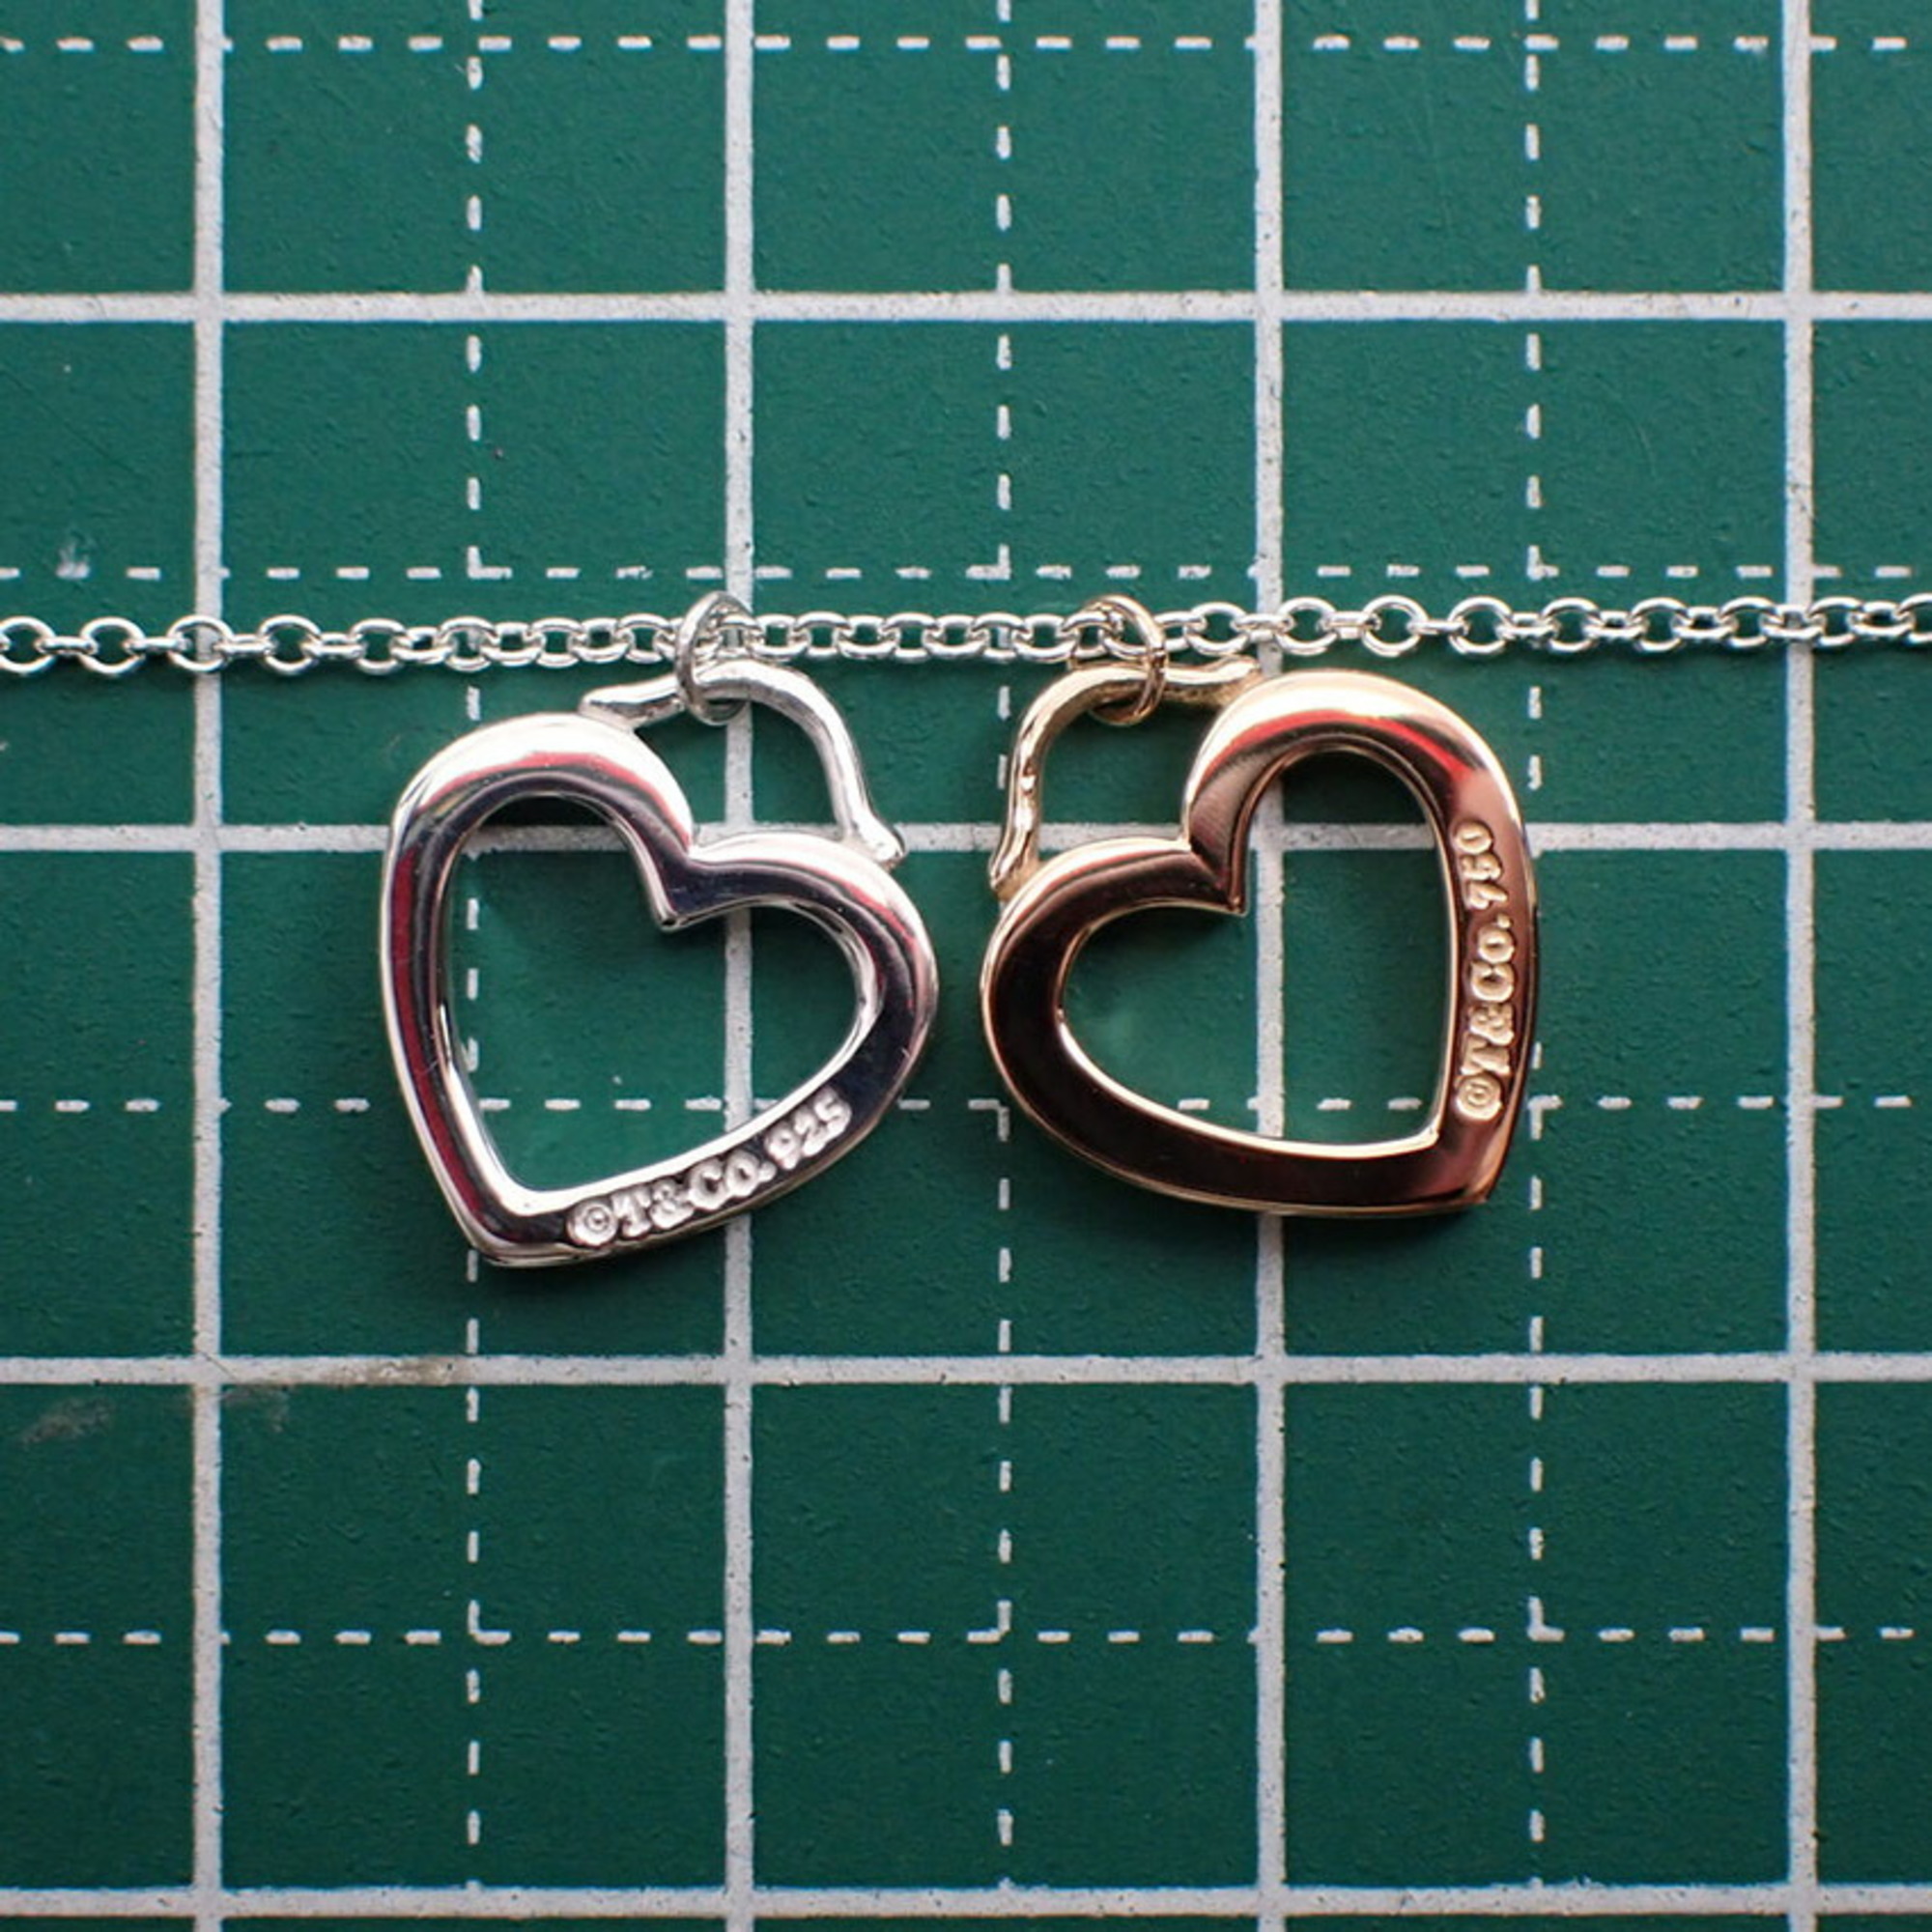 TIFFANY 925/750 Sentimental Heart Pendant/Necklace